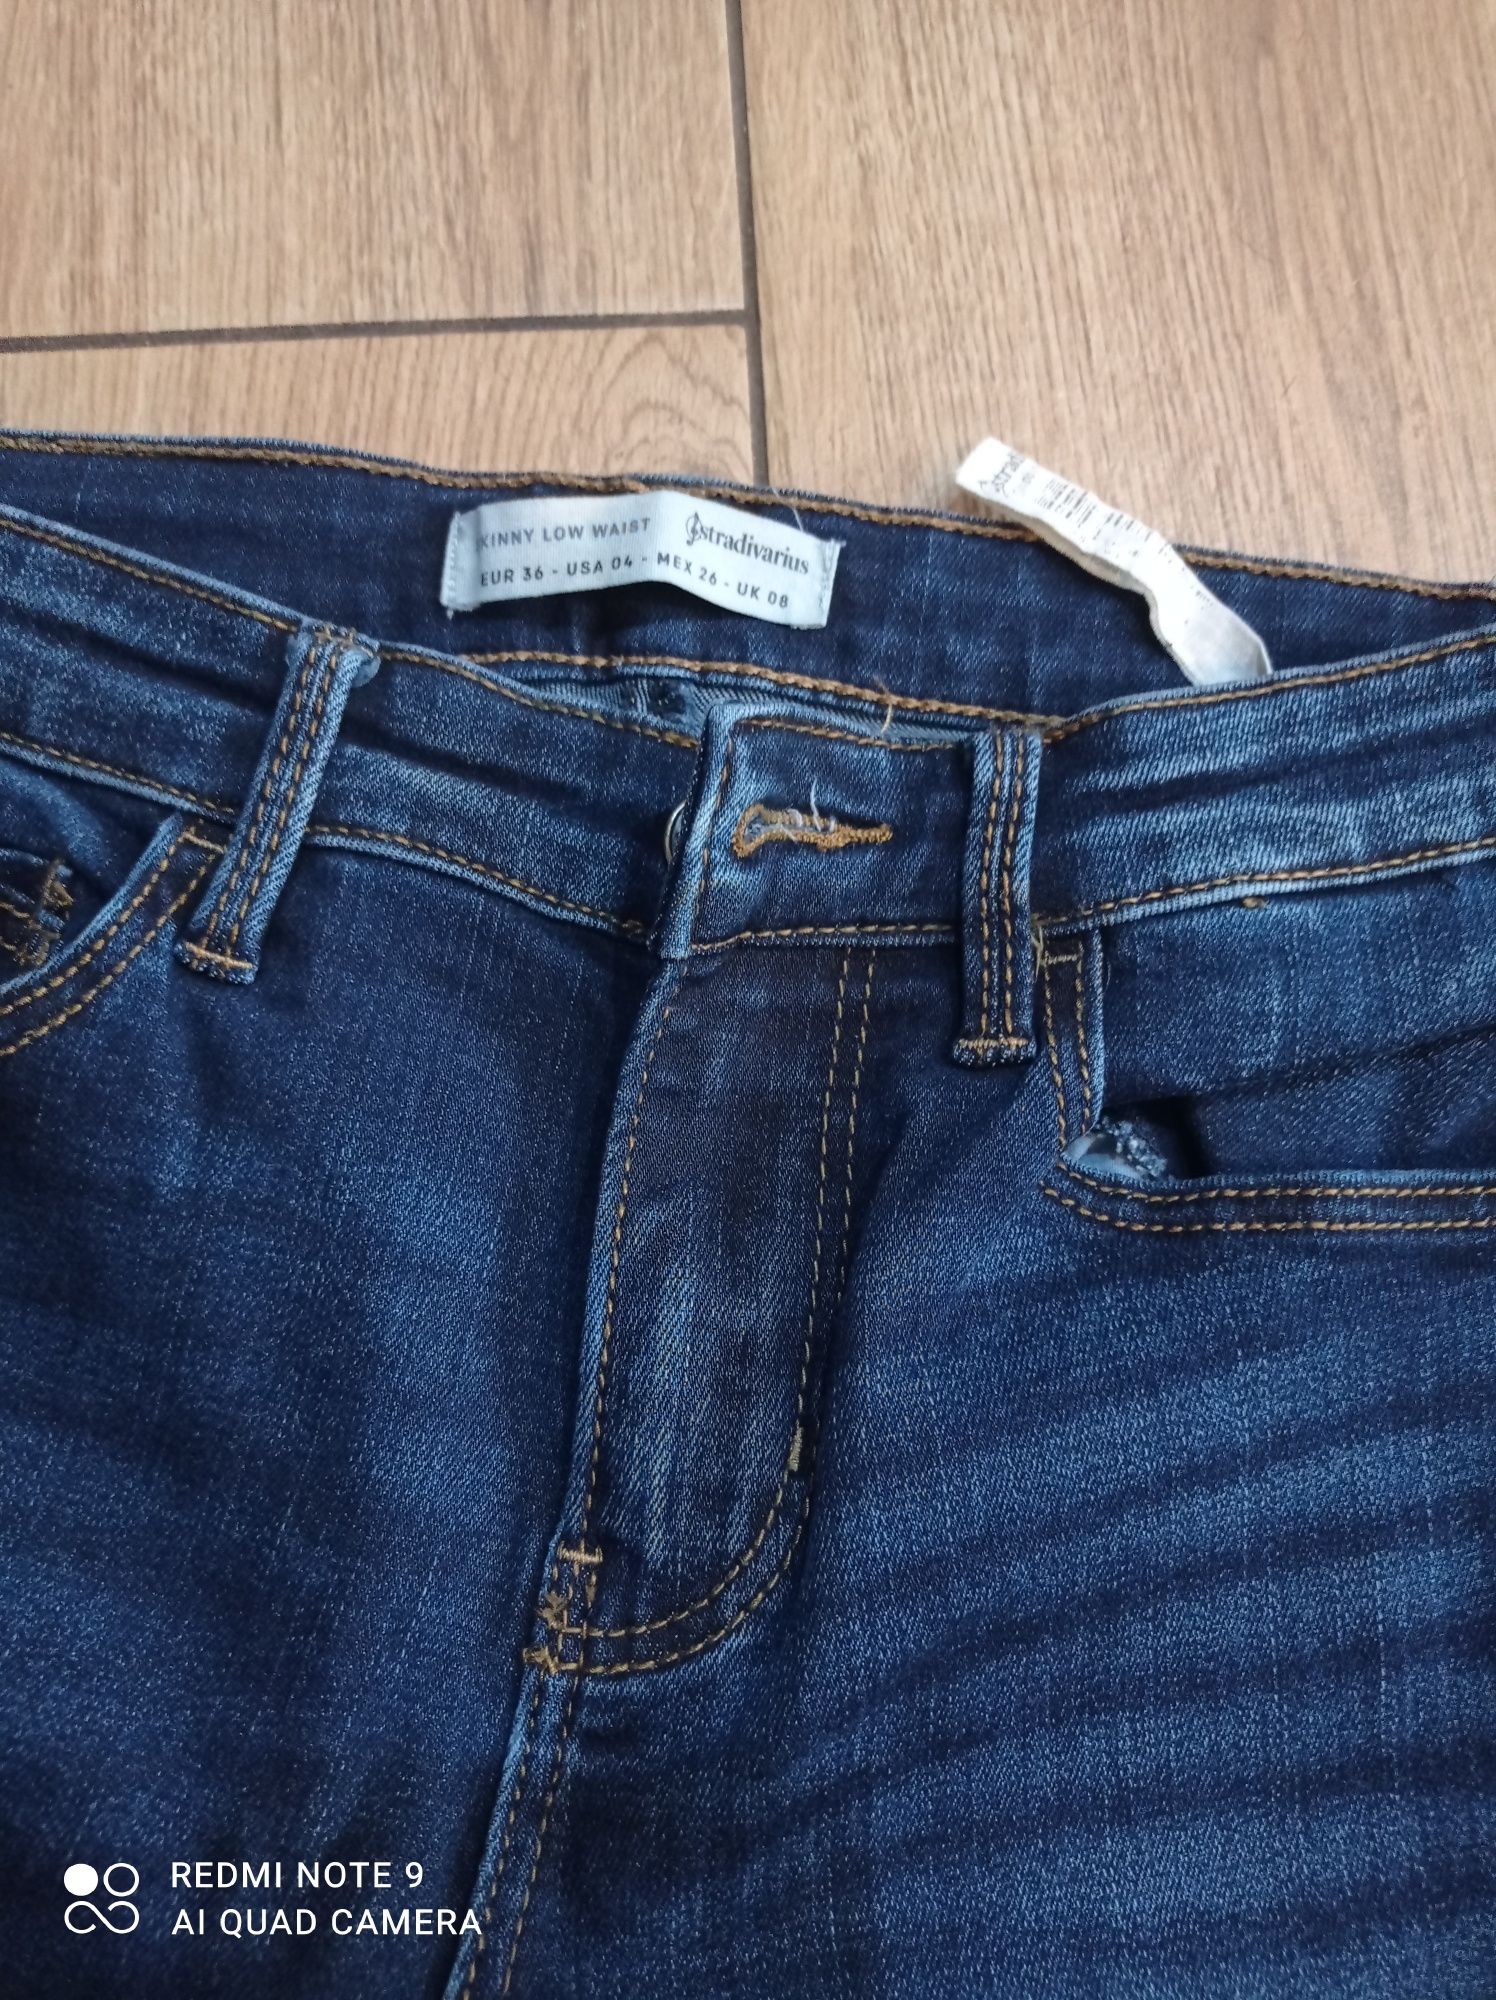 Spodnie jeans 36 stradivarius